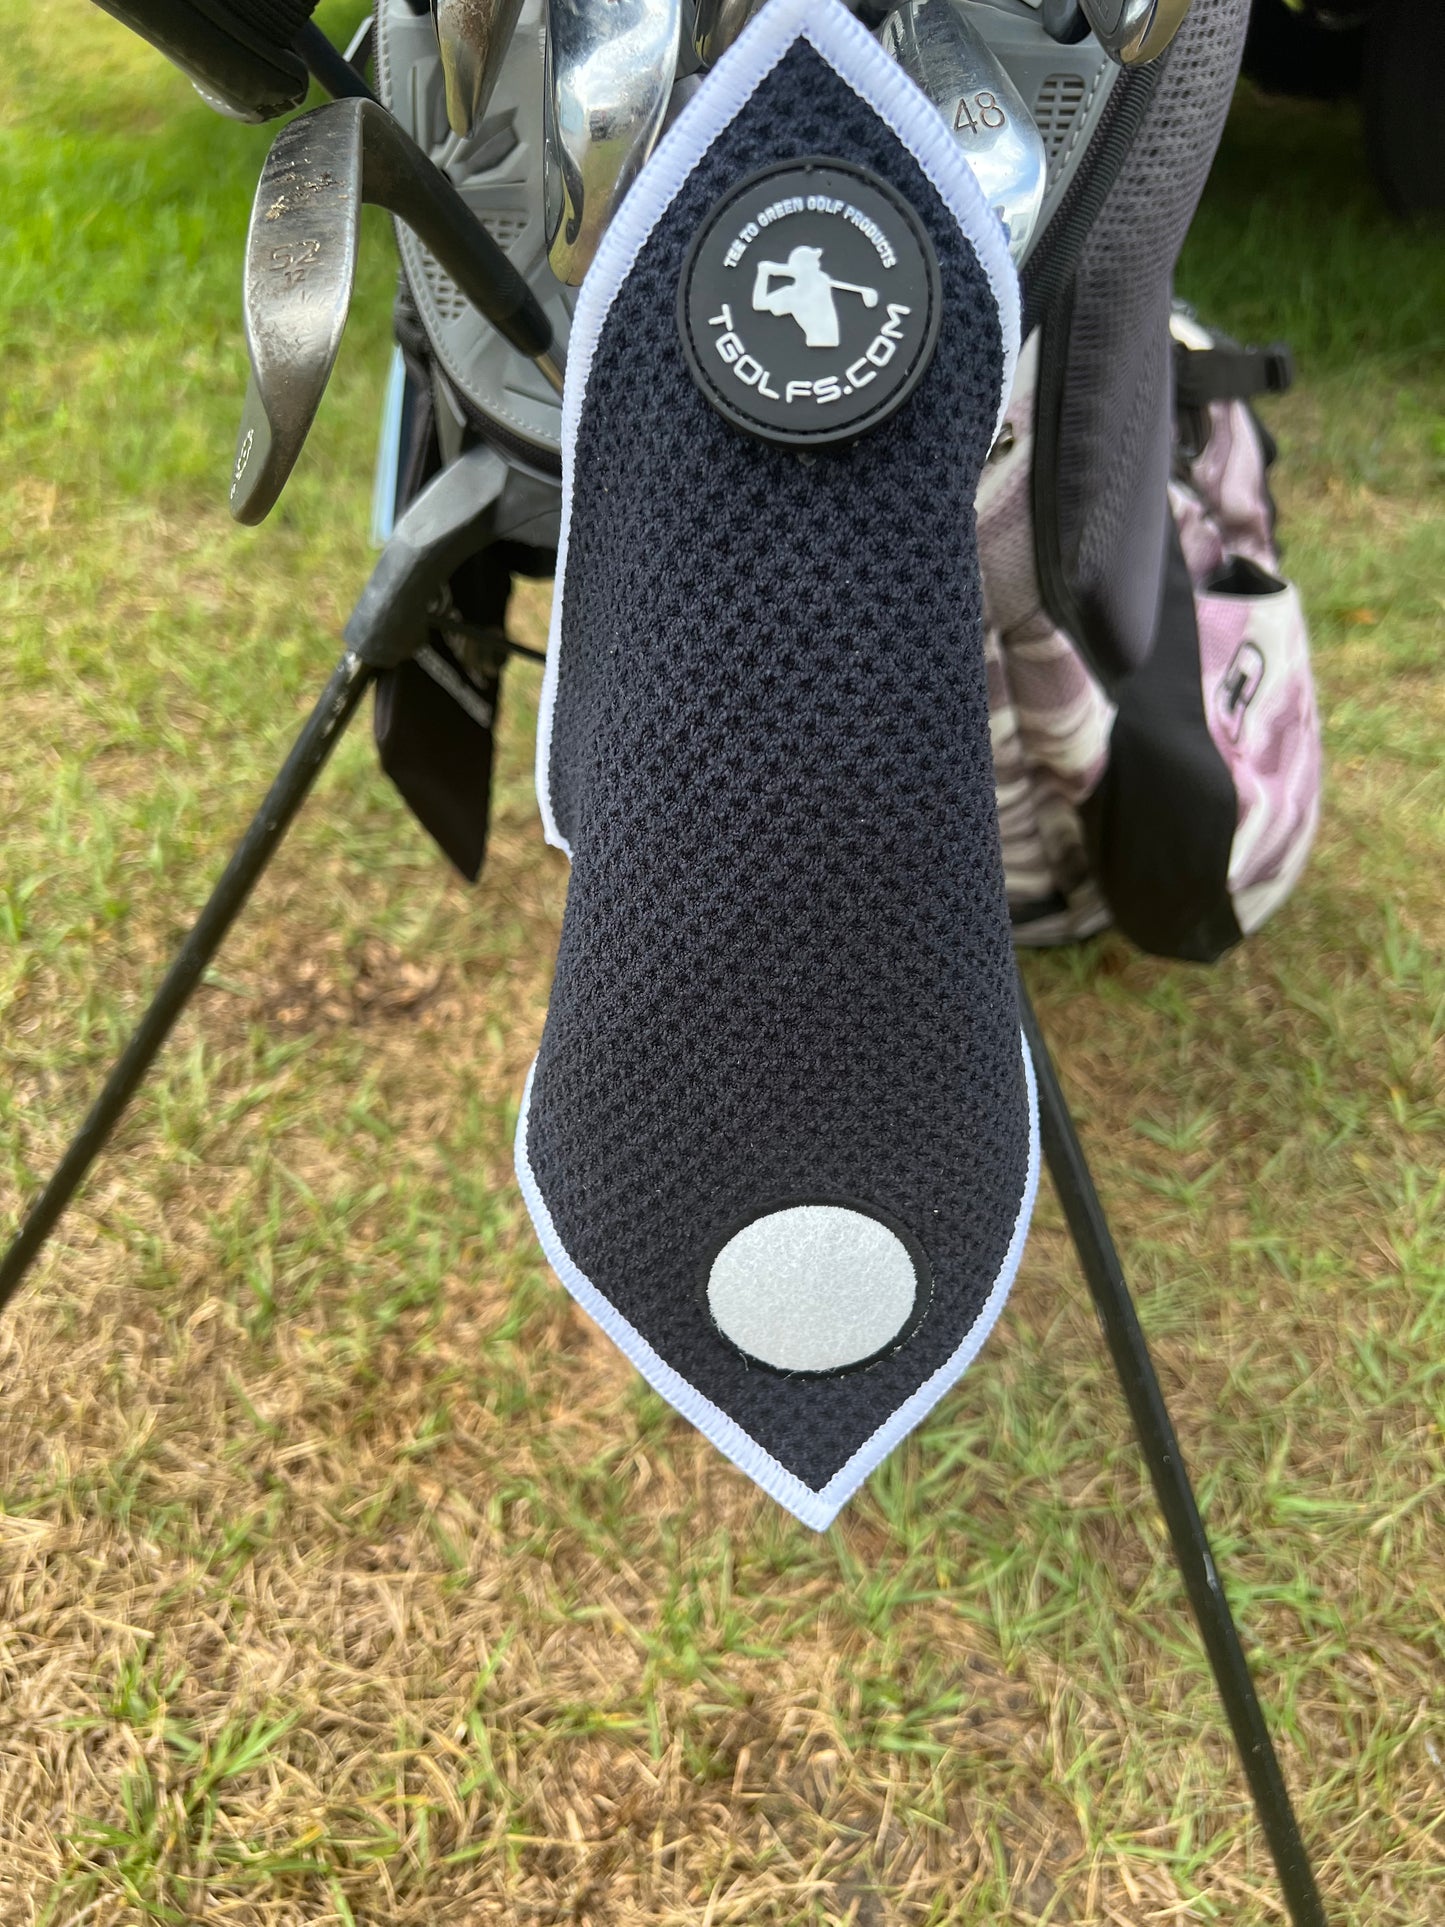 Golf towel hanging from golf cart bag 